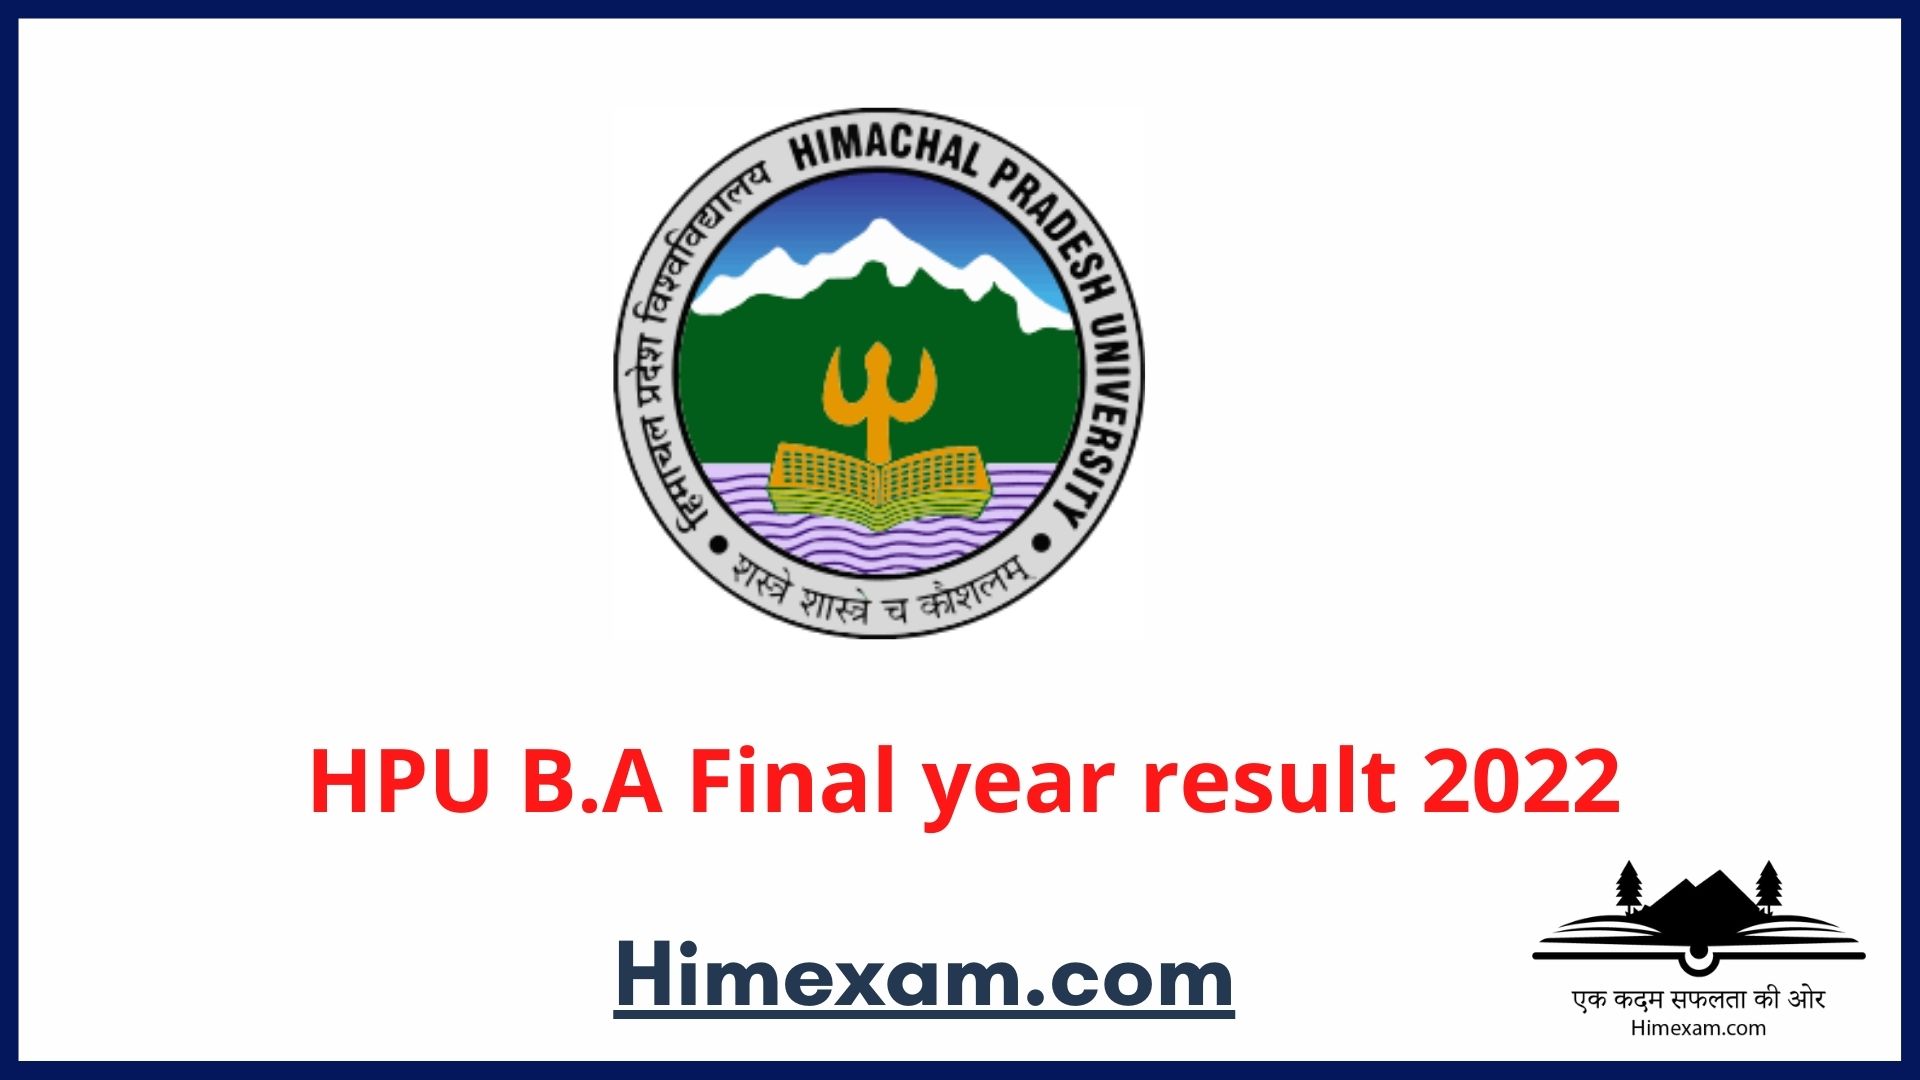 HPU B.A Final year result 2022